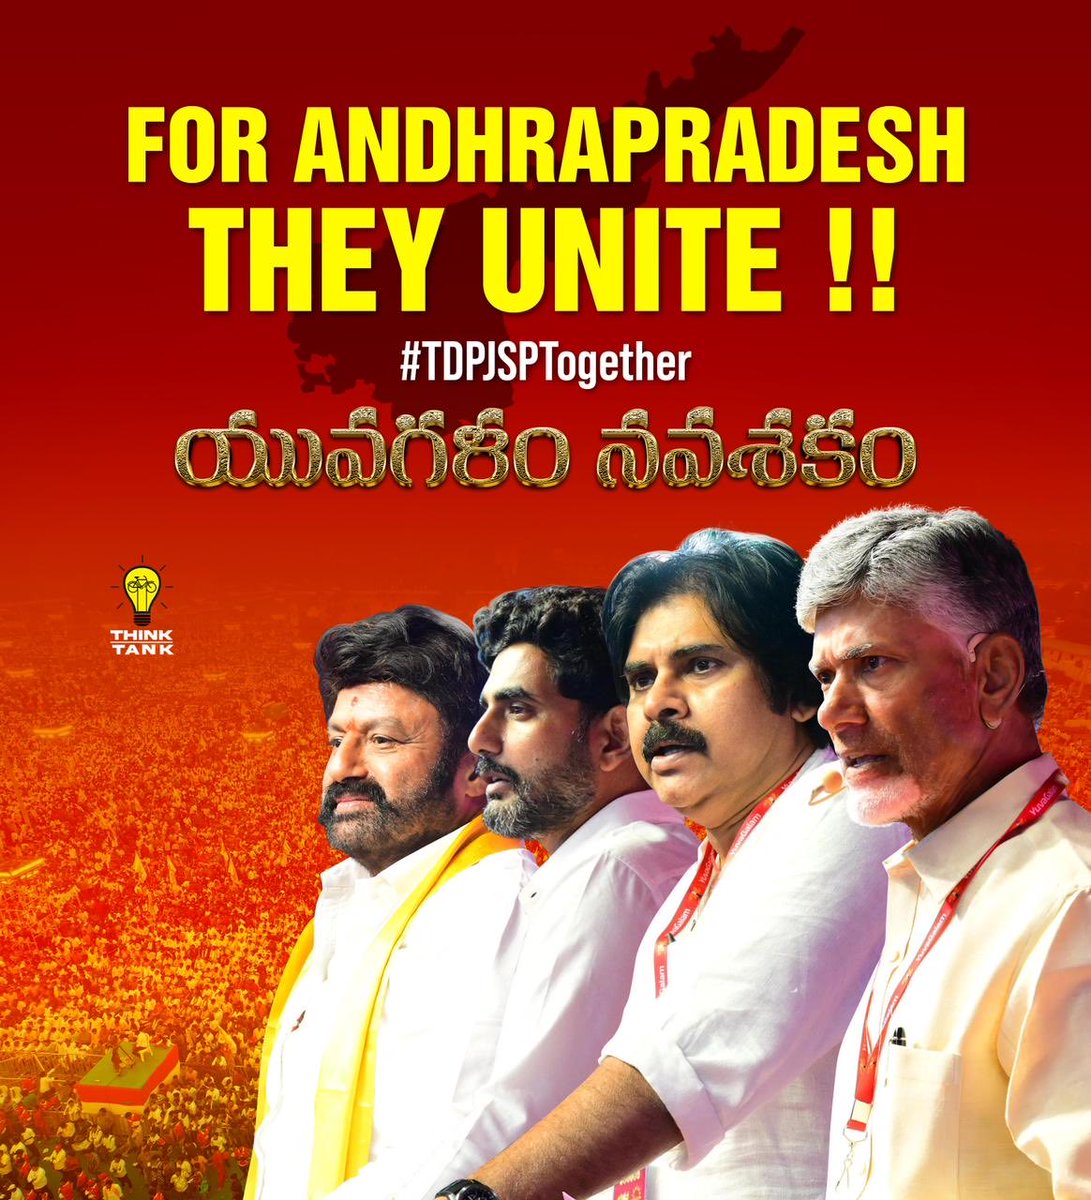 For Andhra Pradesh They Unite..!!
#HOPE0101
#TDPJSPTogether 
#NavaSakamBegins 
#YuvaGalamNavaSakam
#iTDPforTDP 
#YuvaGalamPadayatra 
#LokeshPadayatra 
#NaraLokesh
#PawanKalyan 
#NaraChandrababuNaidu 
#NandamuriBalakrishna 
#NaraLokeshForPeople
#YuvaGalamLokesh
#AndhraPradesh